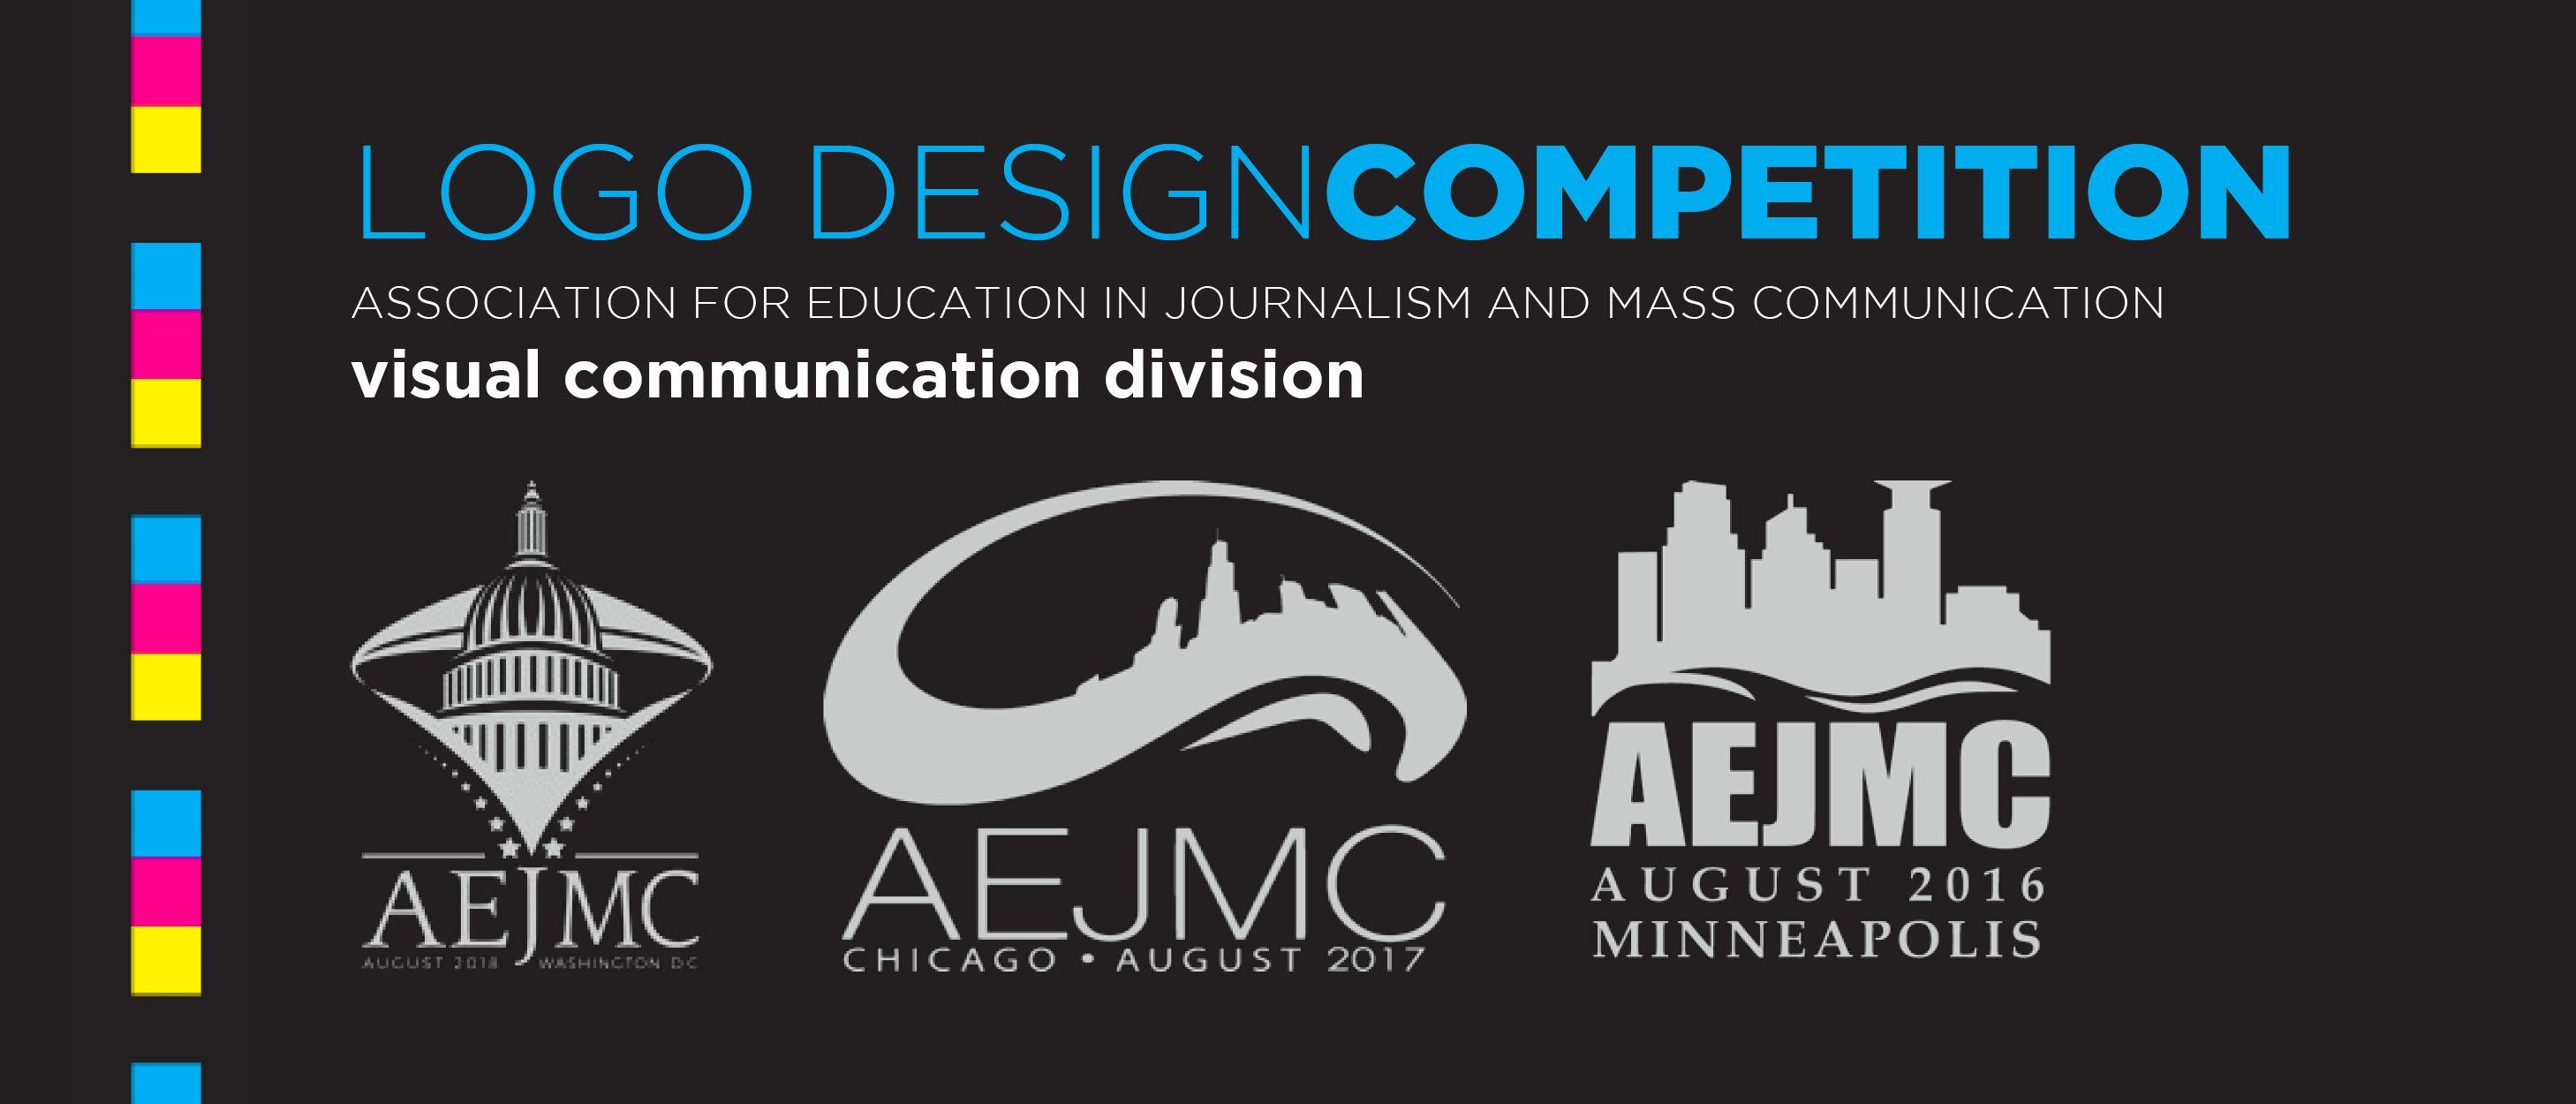 Google Competition 2018 Logo - AEJMC 2019 Conference Logo Design Competition